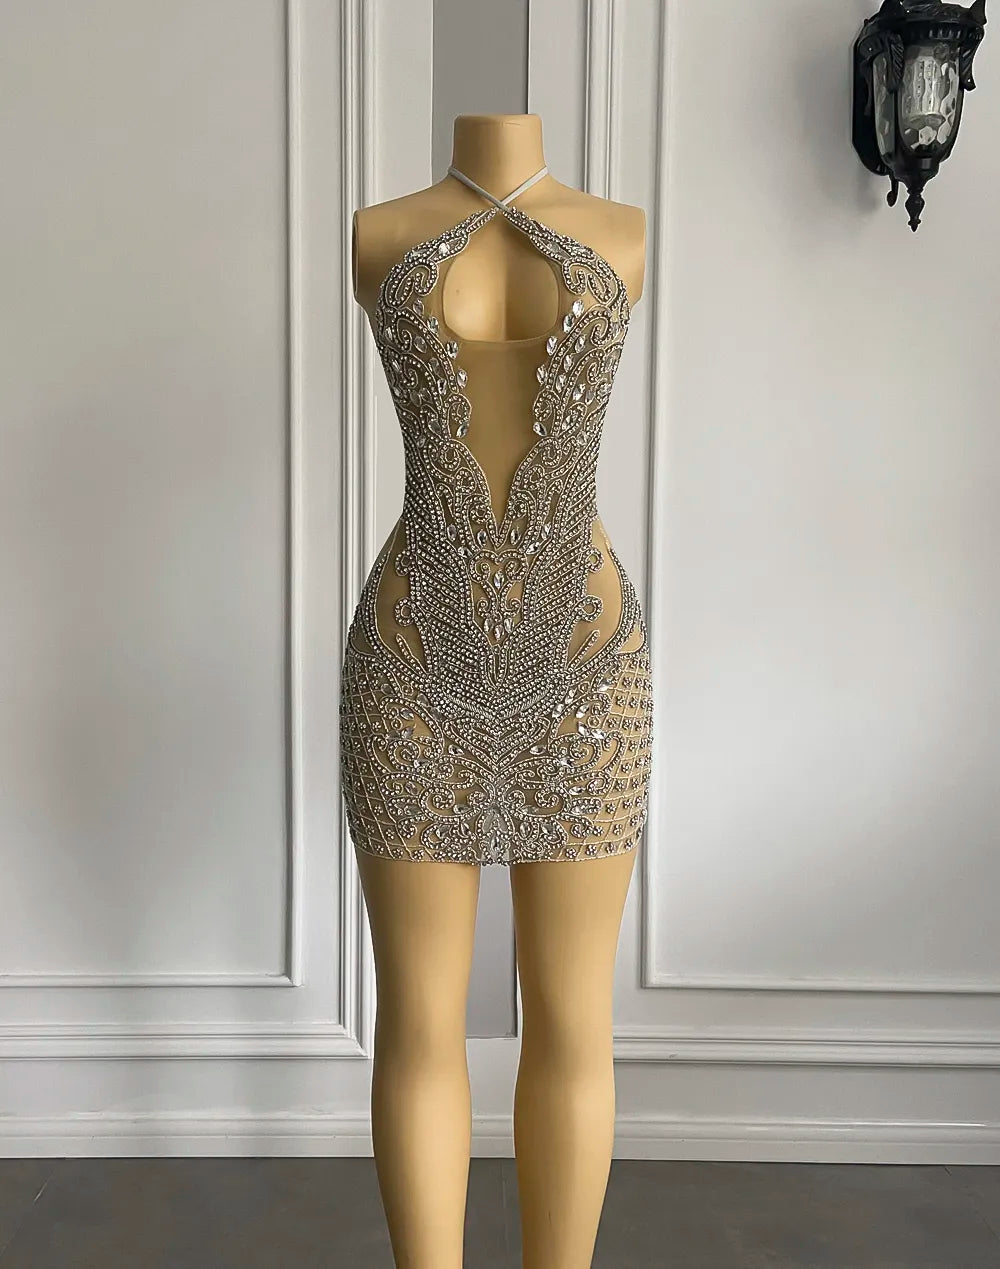 Kelsie Diamond Mini Dress Fashion Closet Clothing